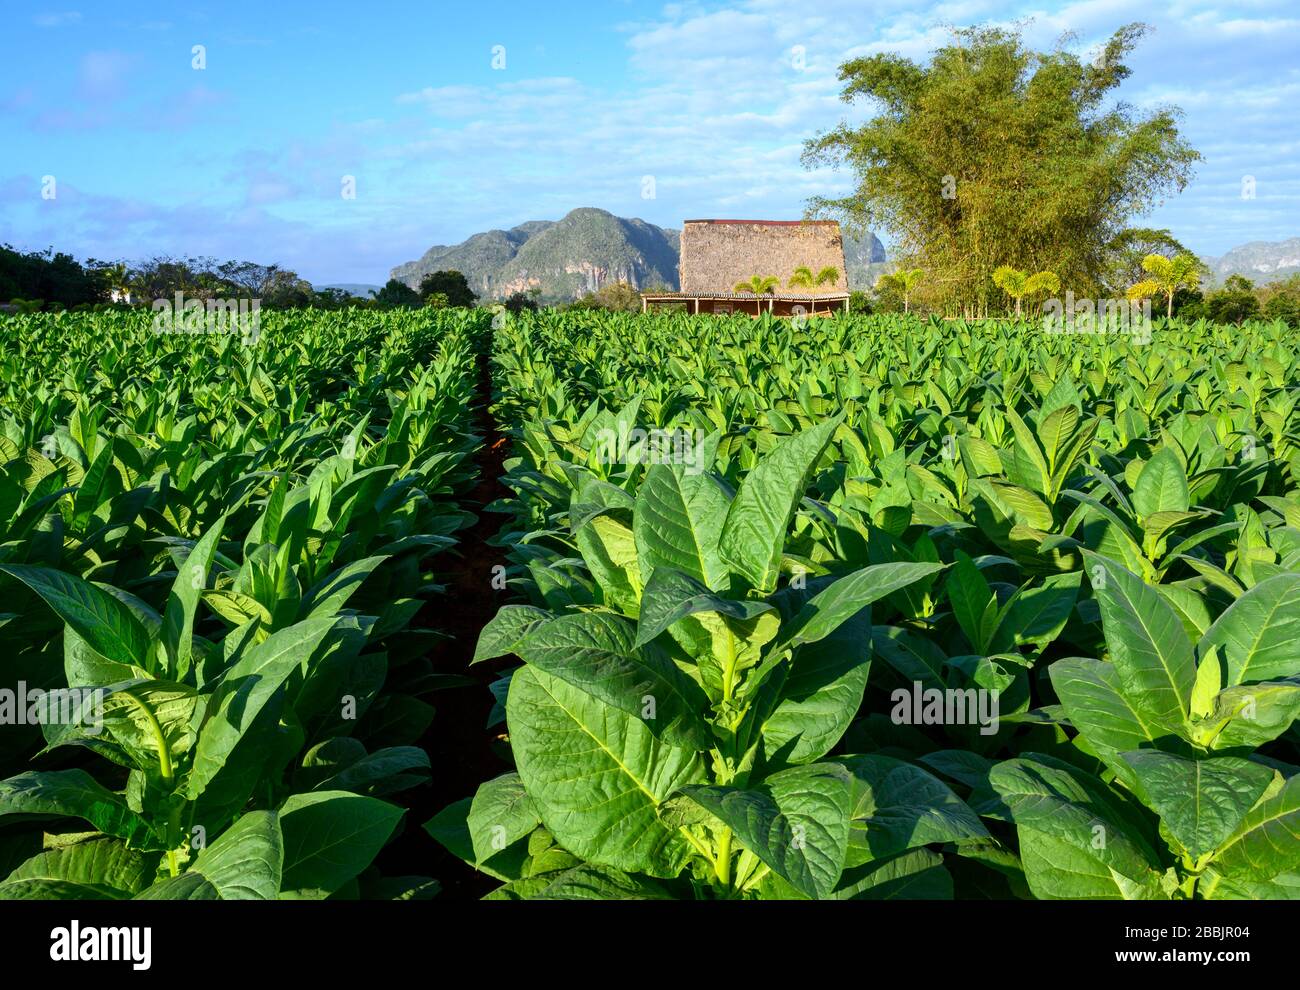 Champ de tabac à cigares biologique avec hangars de séchage, Vinales, province de Pinar del Rio, Cuba Banque D'Images